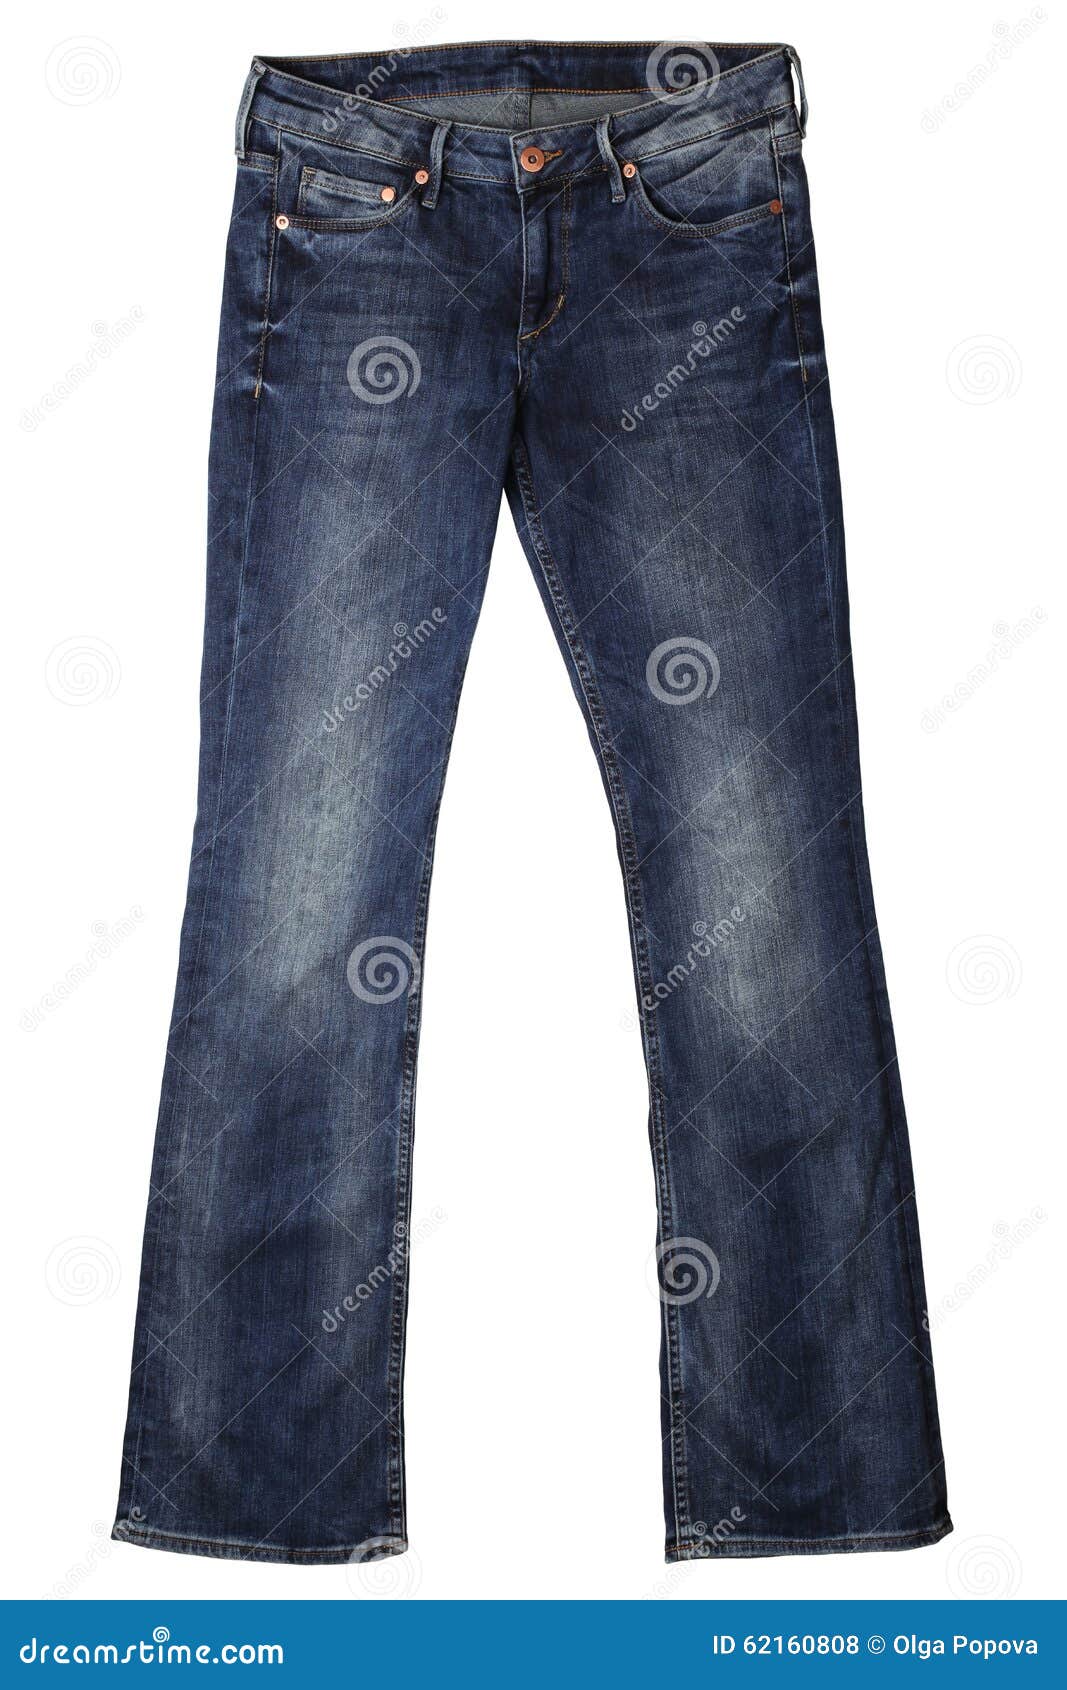 Women s jeans stock photo. Image of denim, isolation - 62160808